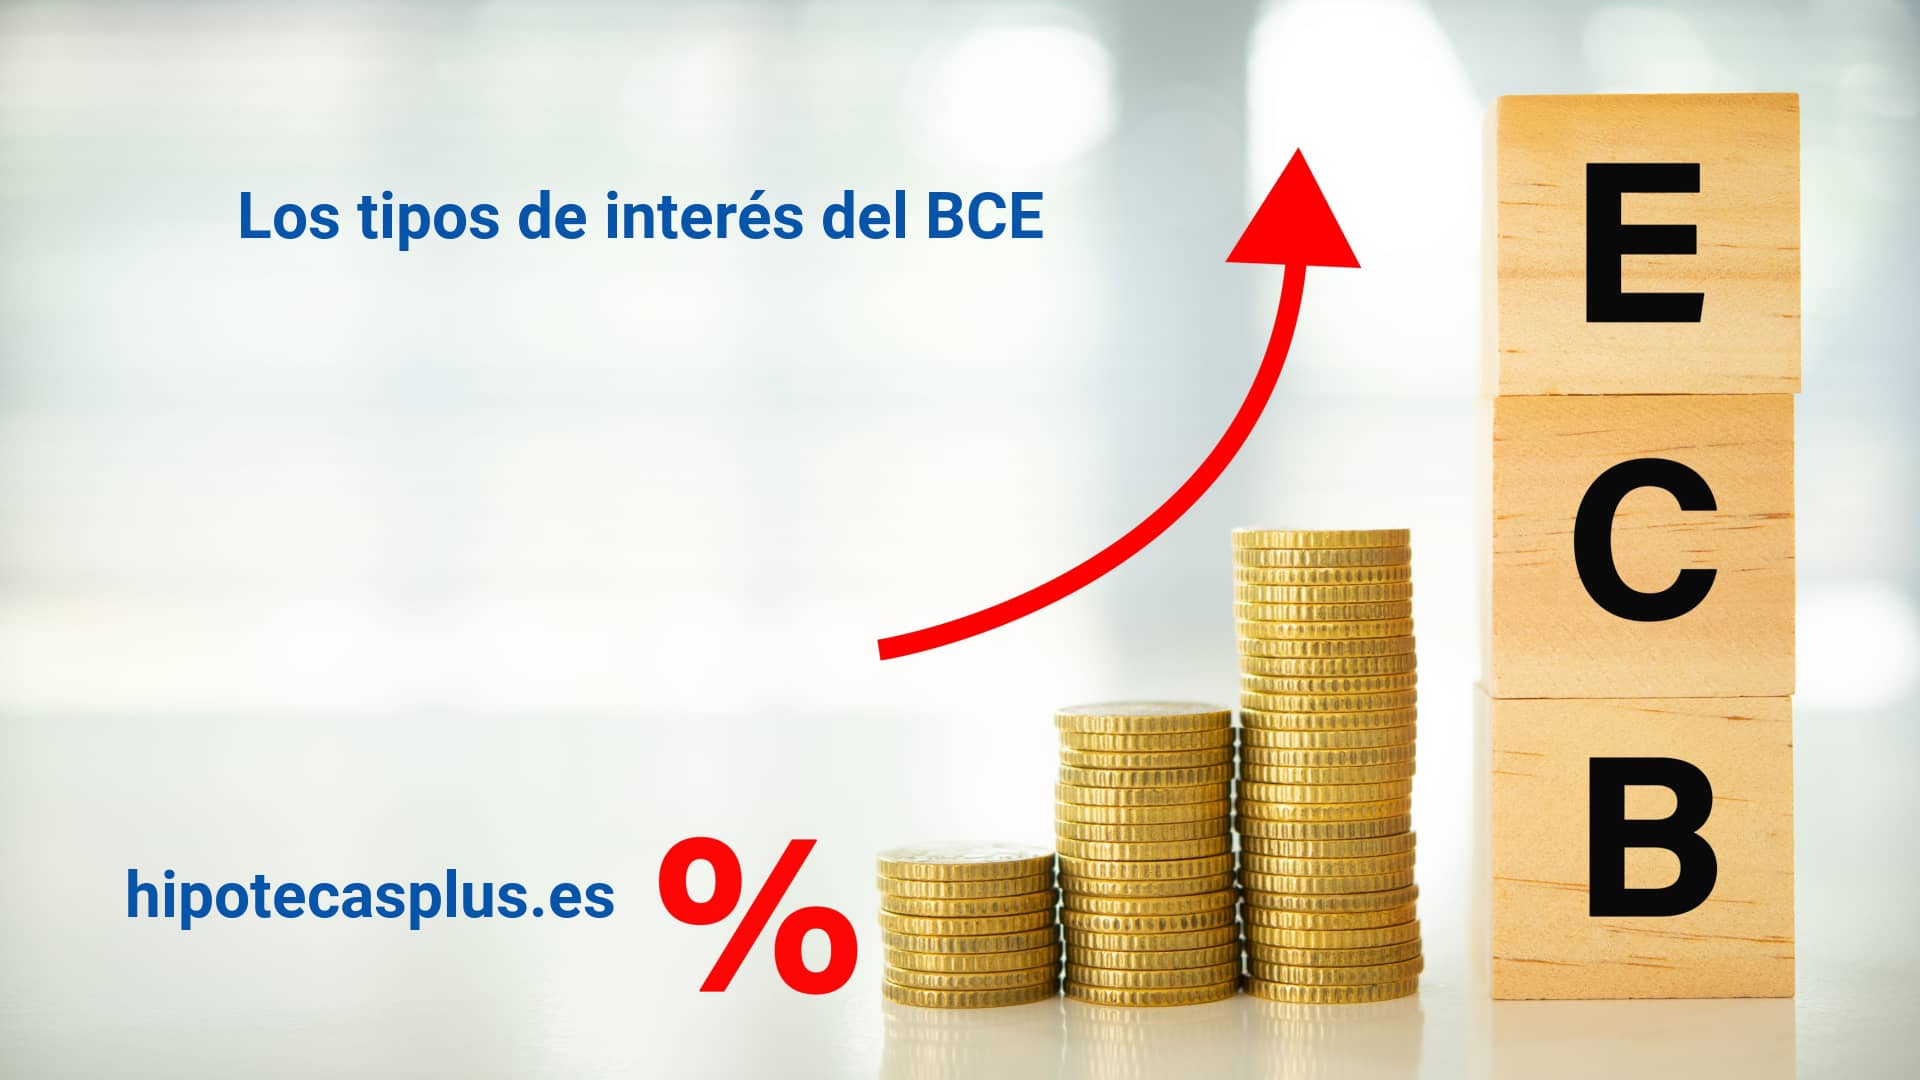 https://www.hipotecasplus.es/wp-content/uploads/HipotecasPlus-los-tipos-de-interes-del-BCE-.jpg